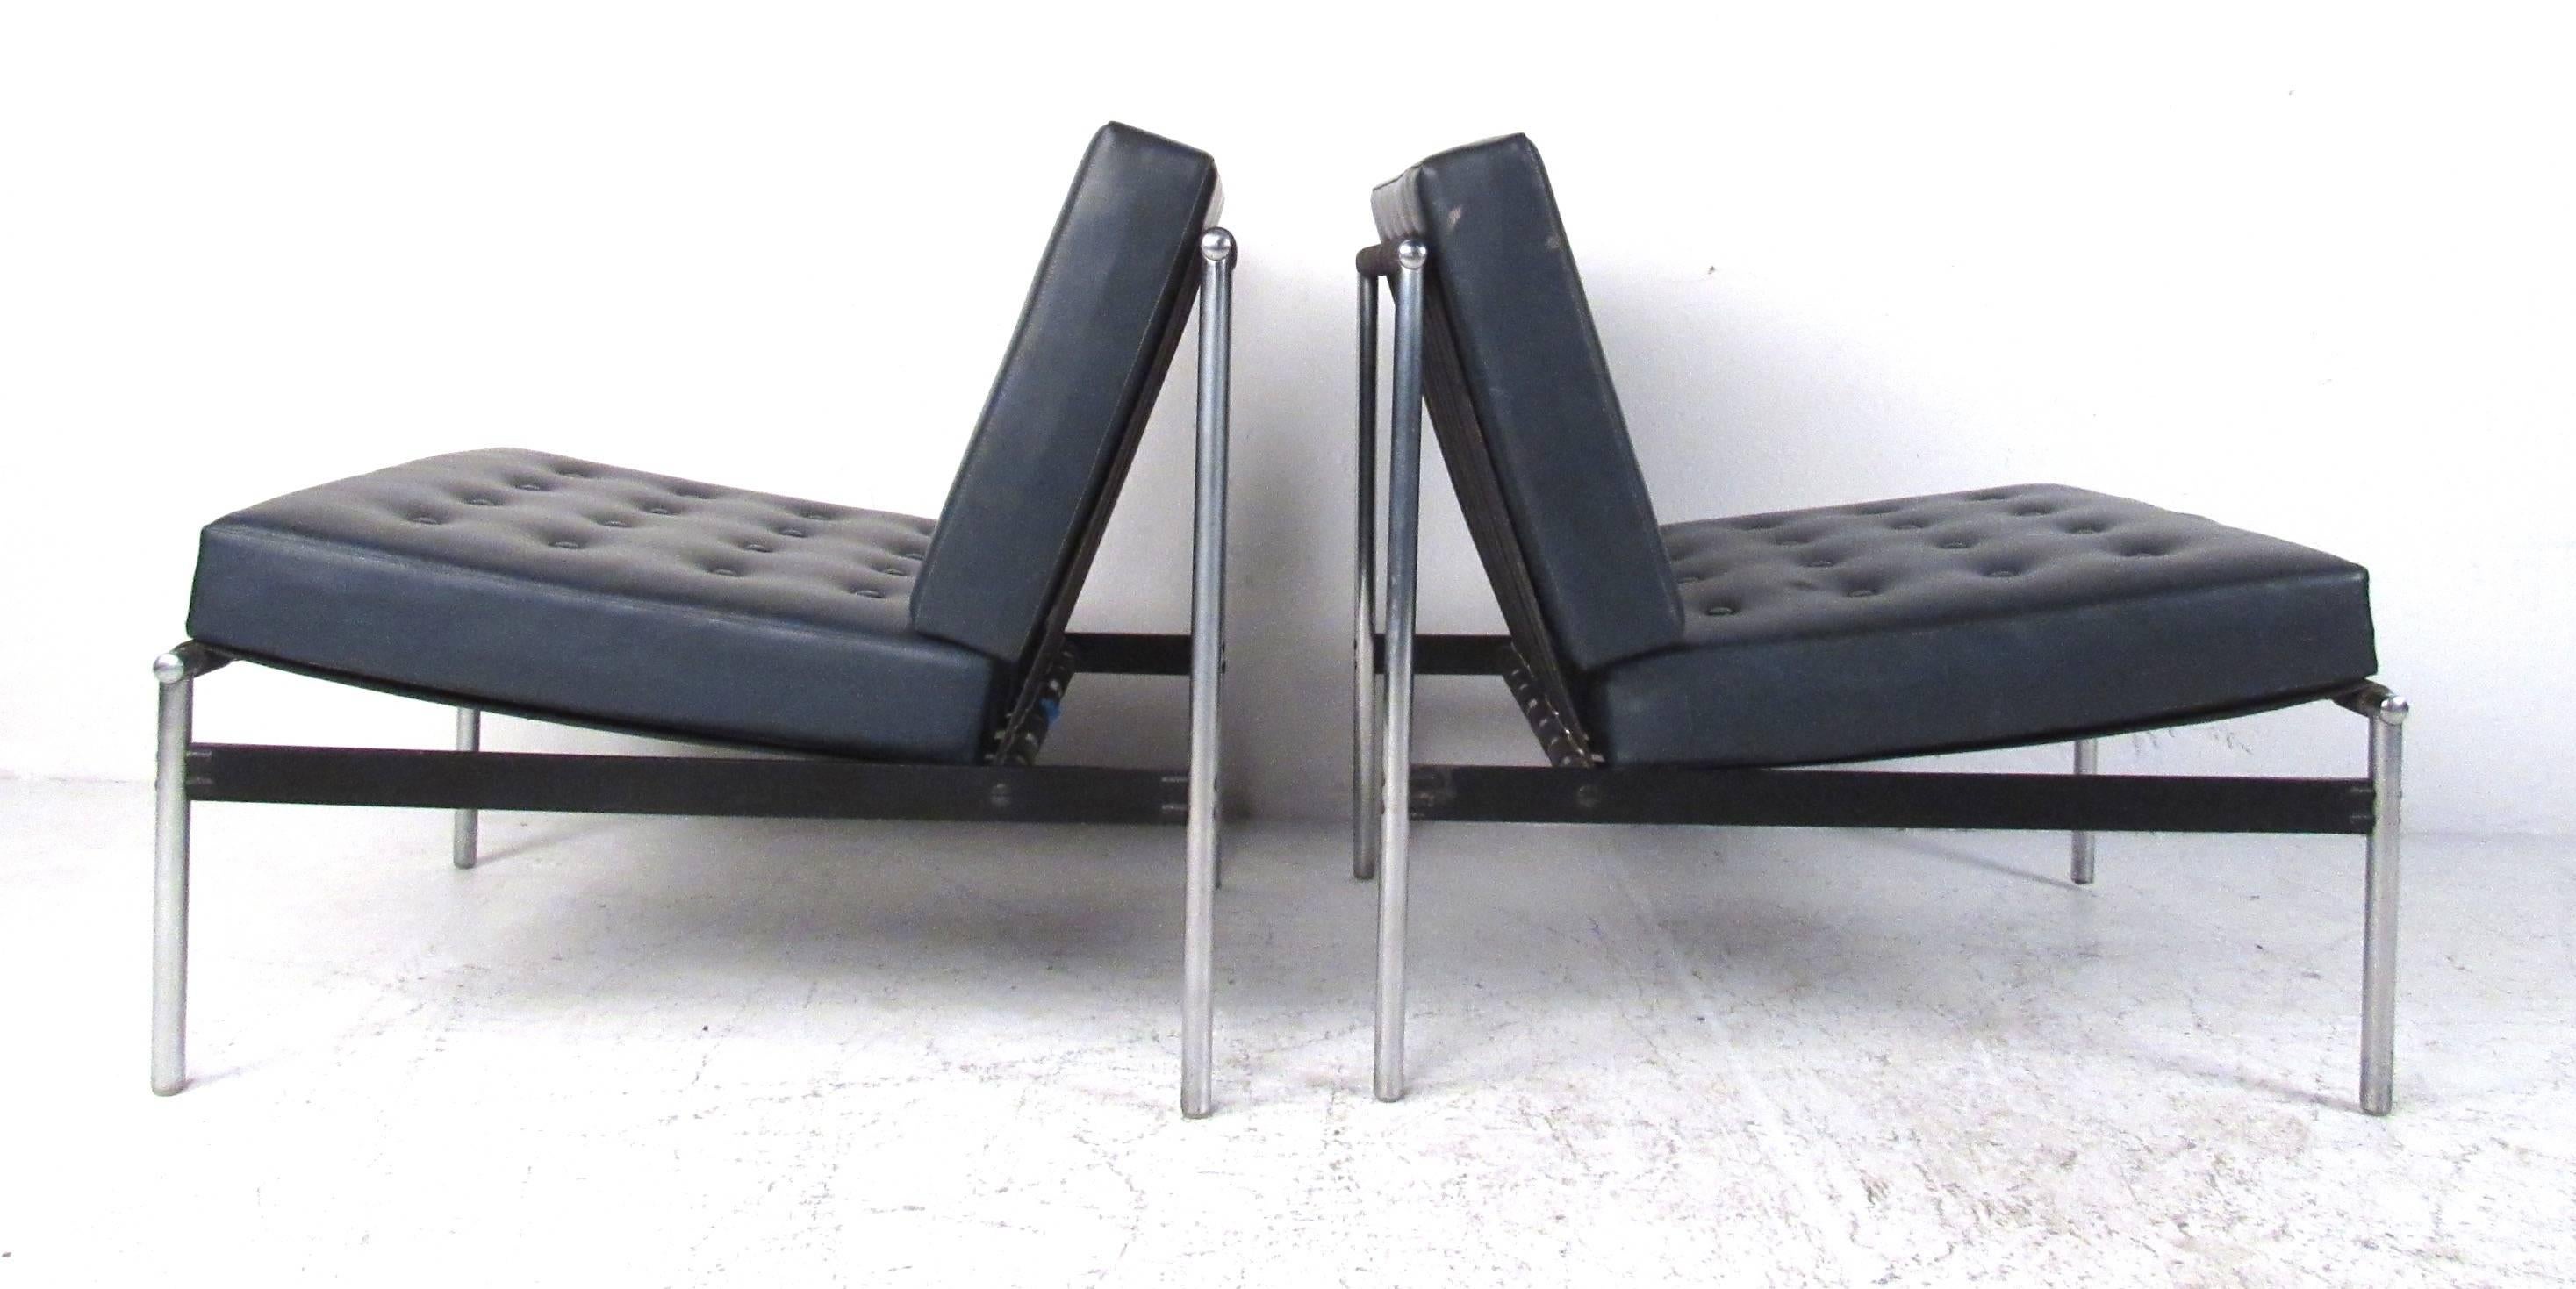 Italian Ernst Josef Designed Mid-Century Modern Slipper Chairs For Sale